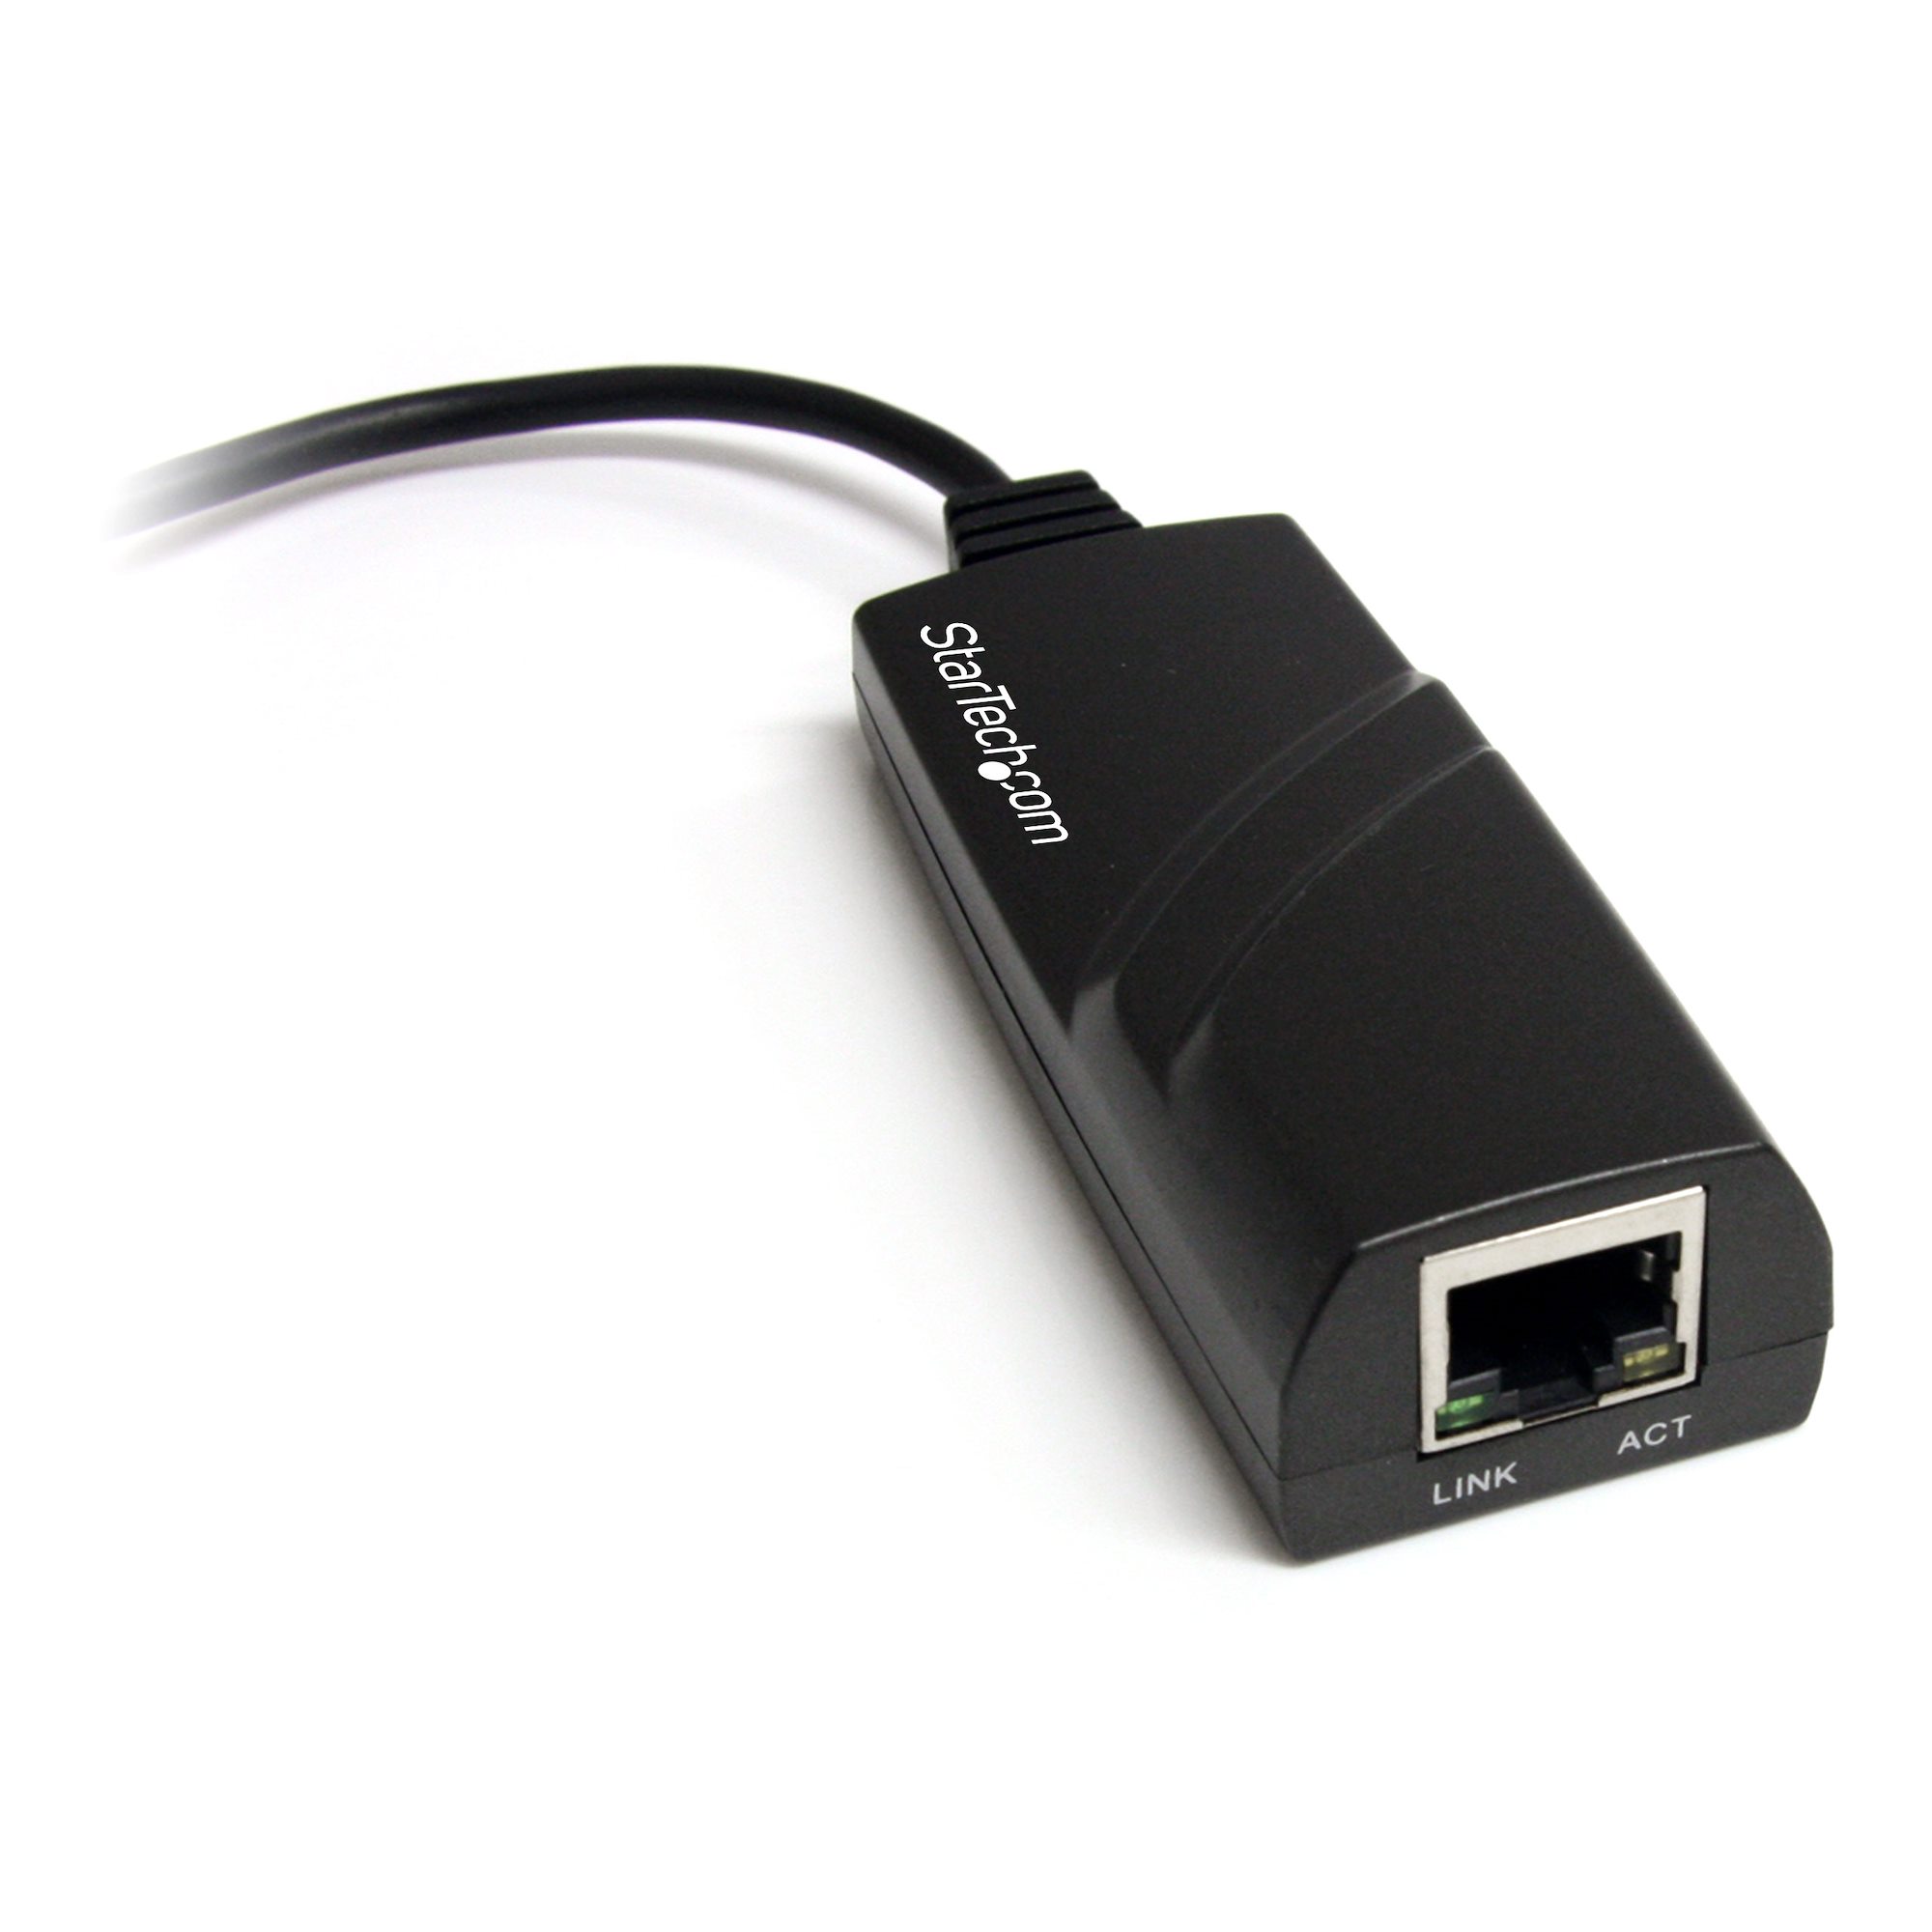 USB 2.0 a LAN RJ45 Ethernet 10/100 Mbps Scheda di Rete Adattatore Per PC Nuovo 